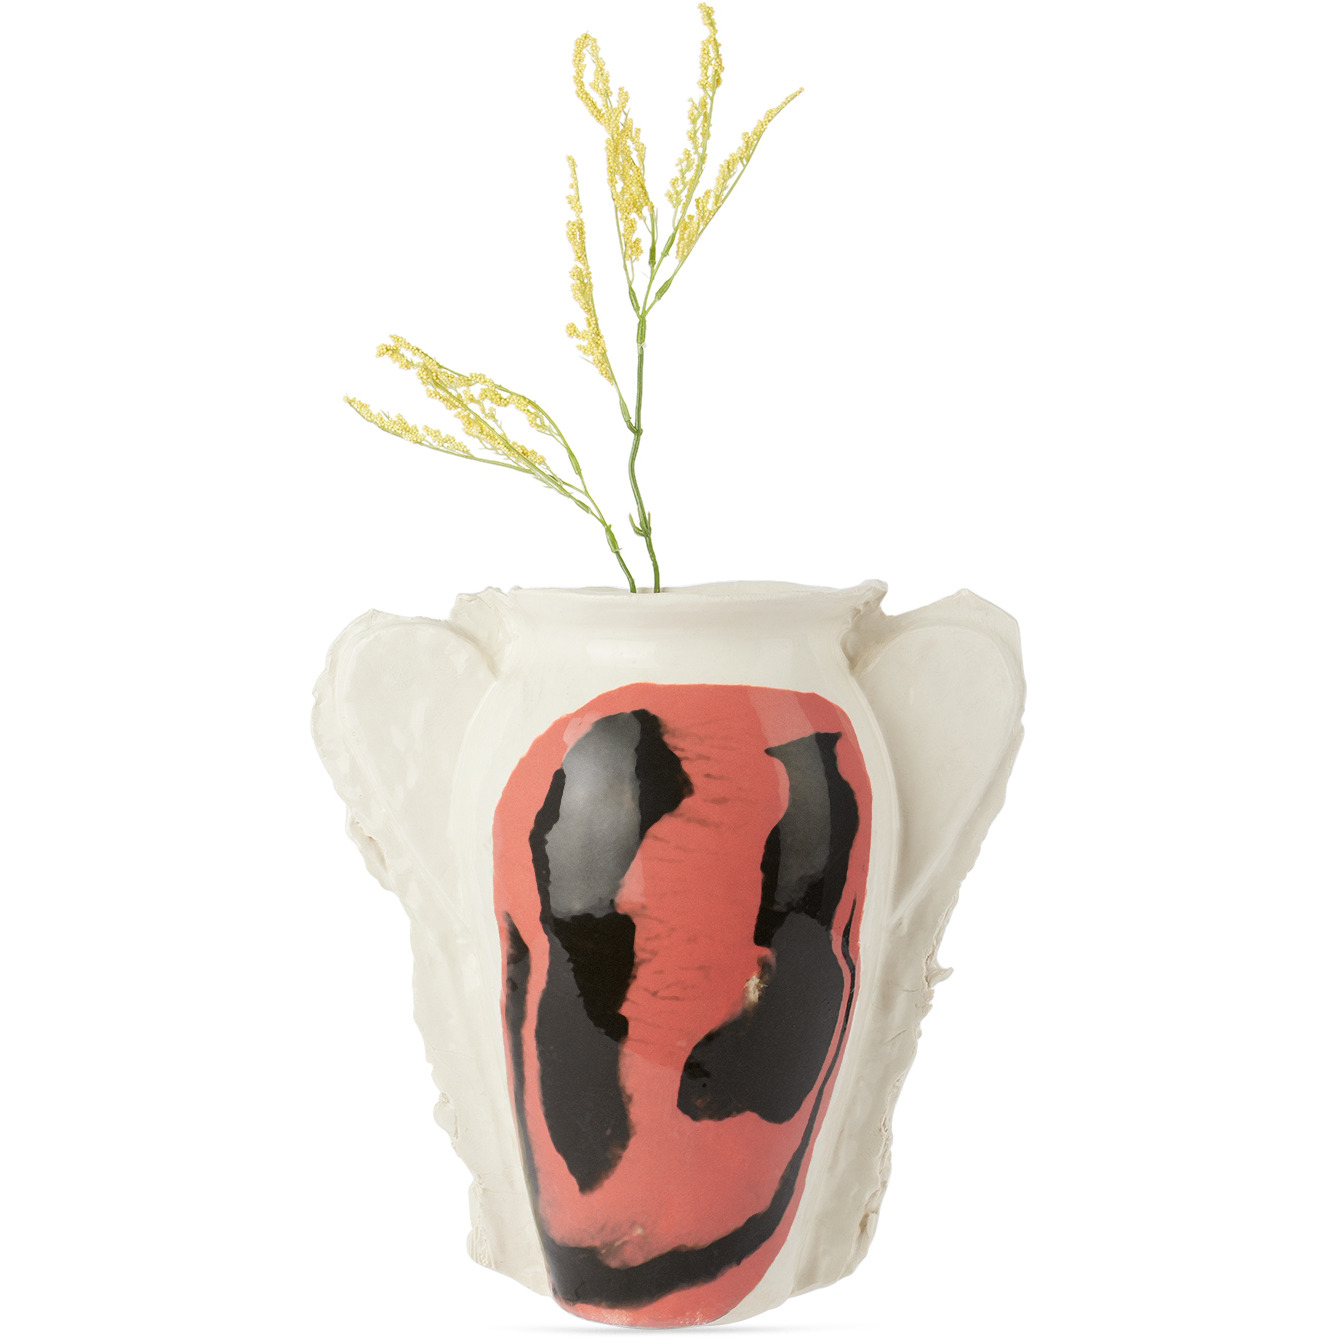 DUM KERAMIK Off-White & Red Large Smiley Face Vase - image 1